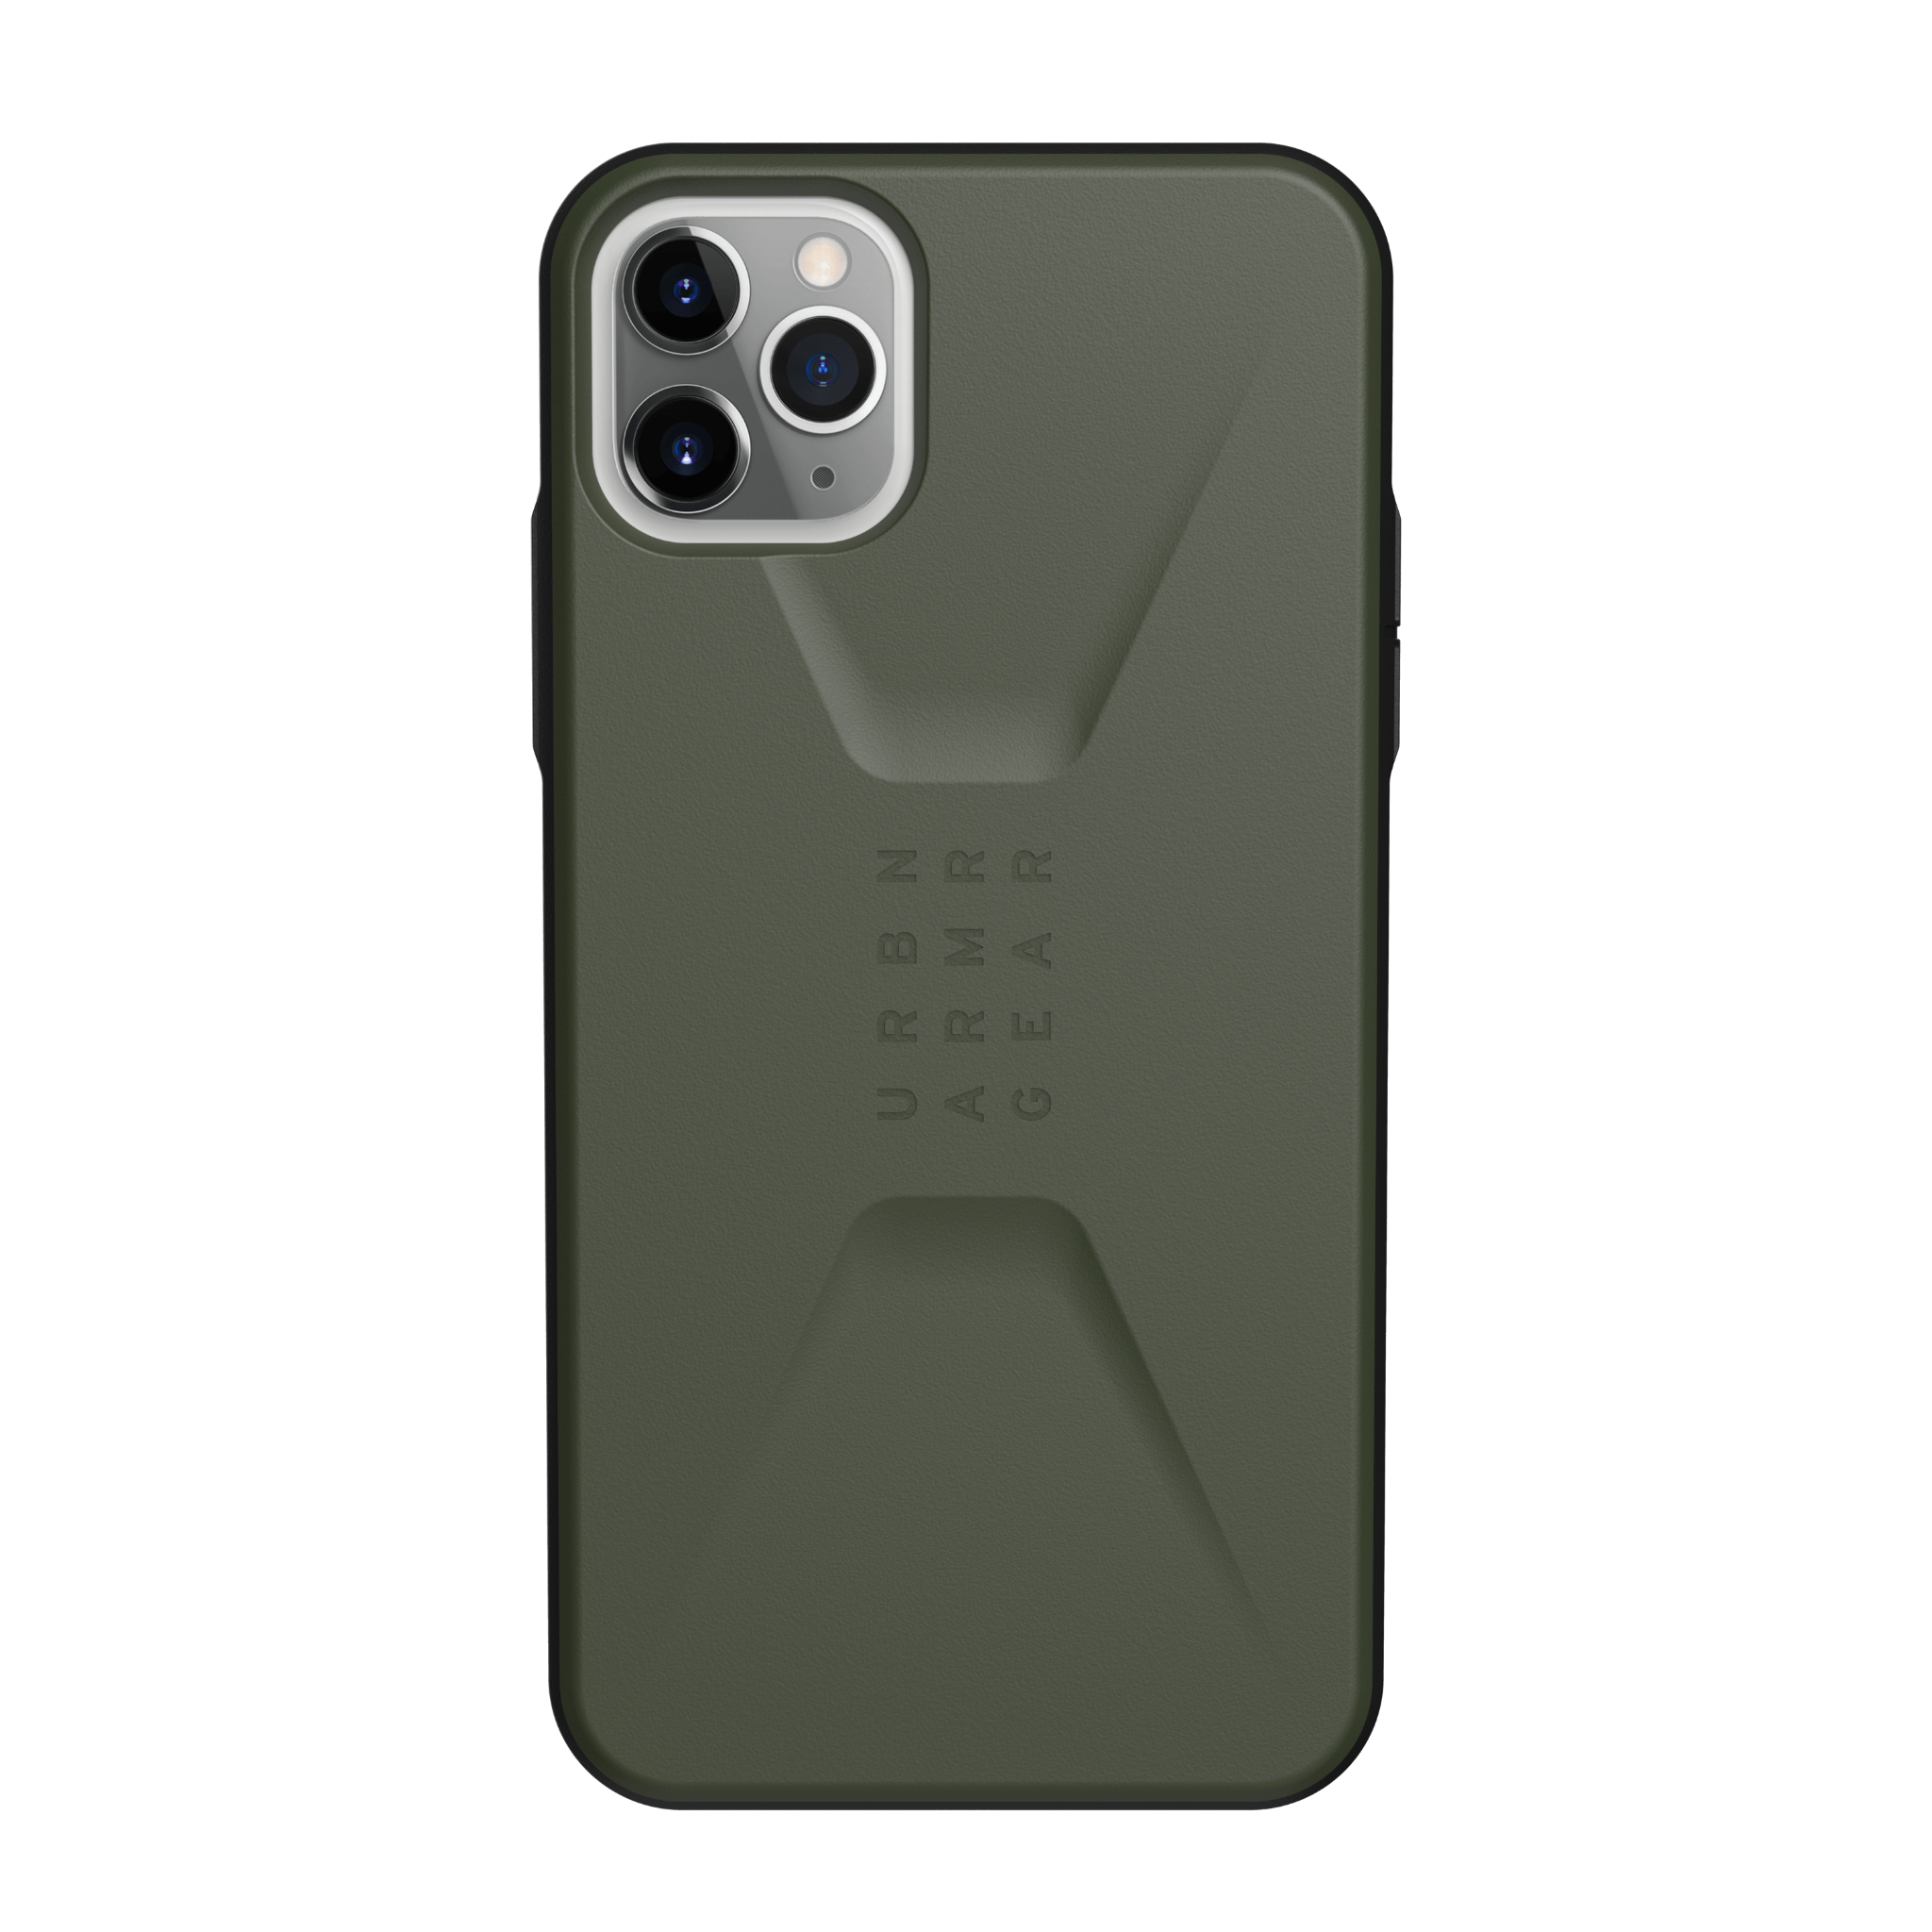  Ốp lưng Civilian cho iPhone 11 Pro Max [6.5-inch] 